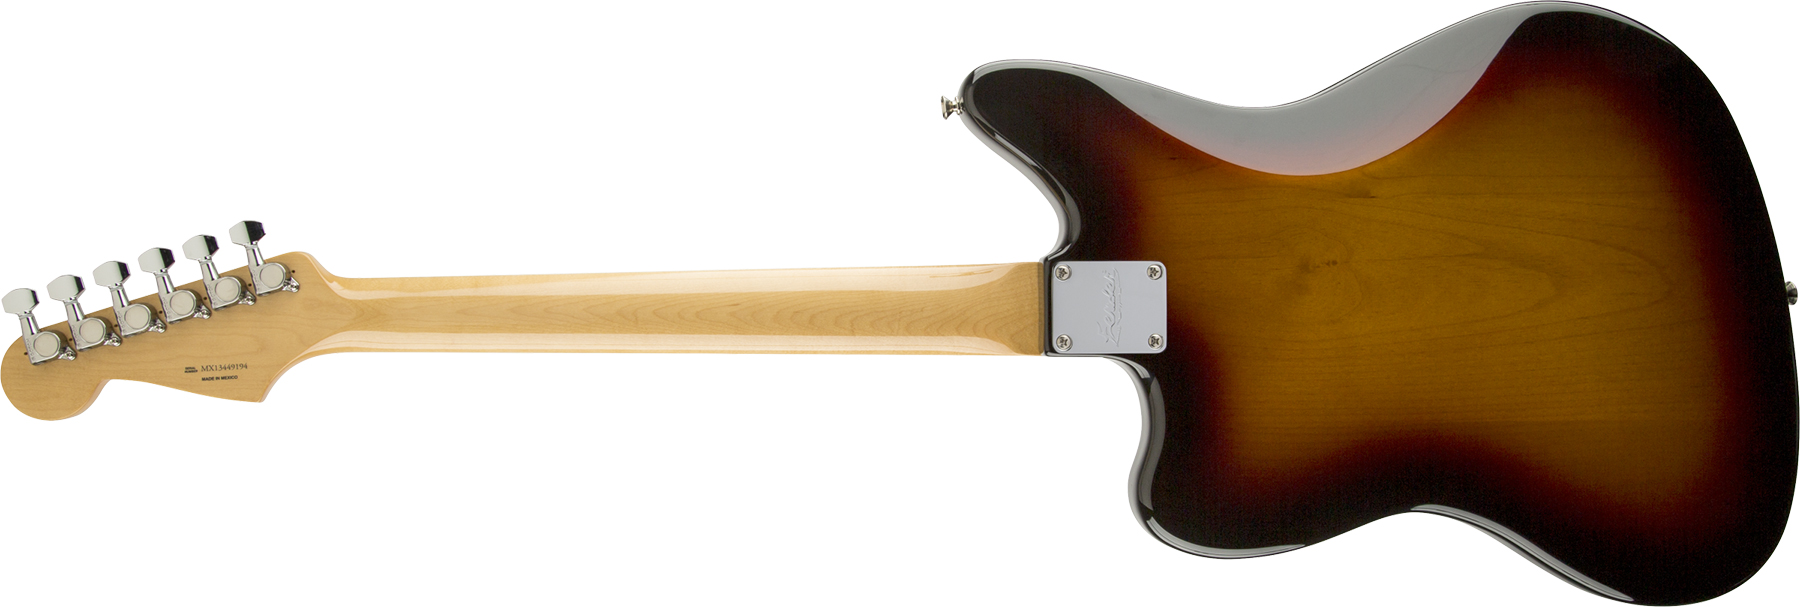 Fender Kurt Cobain Jaguar Mex Hh Trem Rw - 3-color Sunburst - Guitarra electrica retro rock - Variation 1